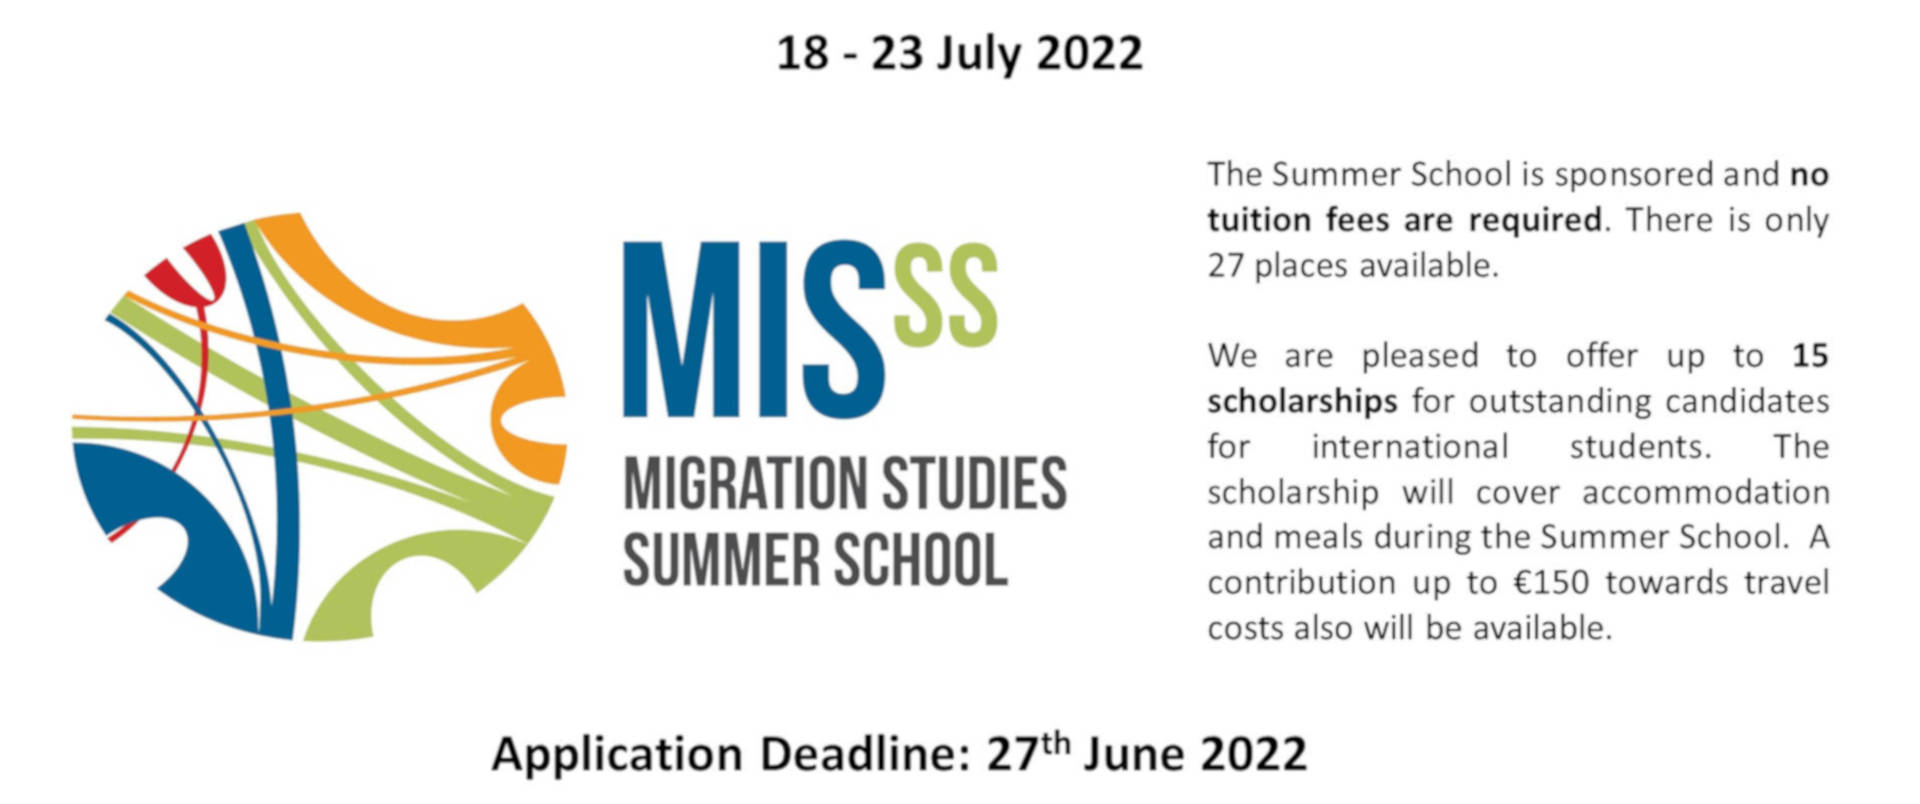 Summer School "Migration Studies" (MISSS)